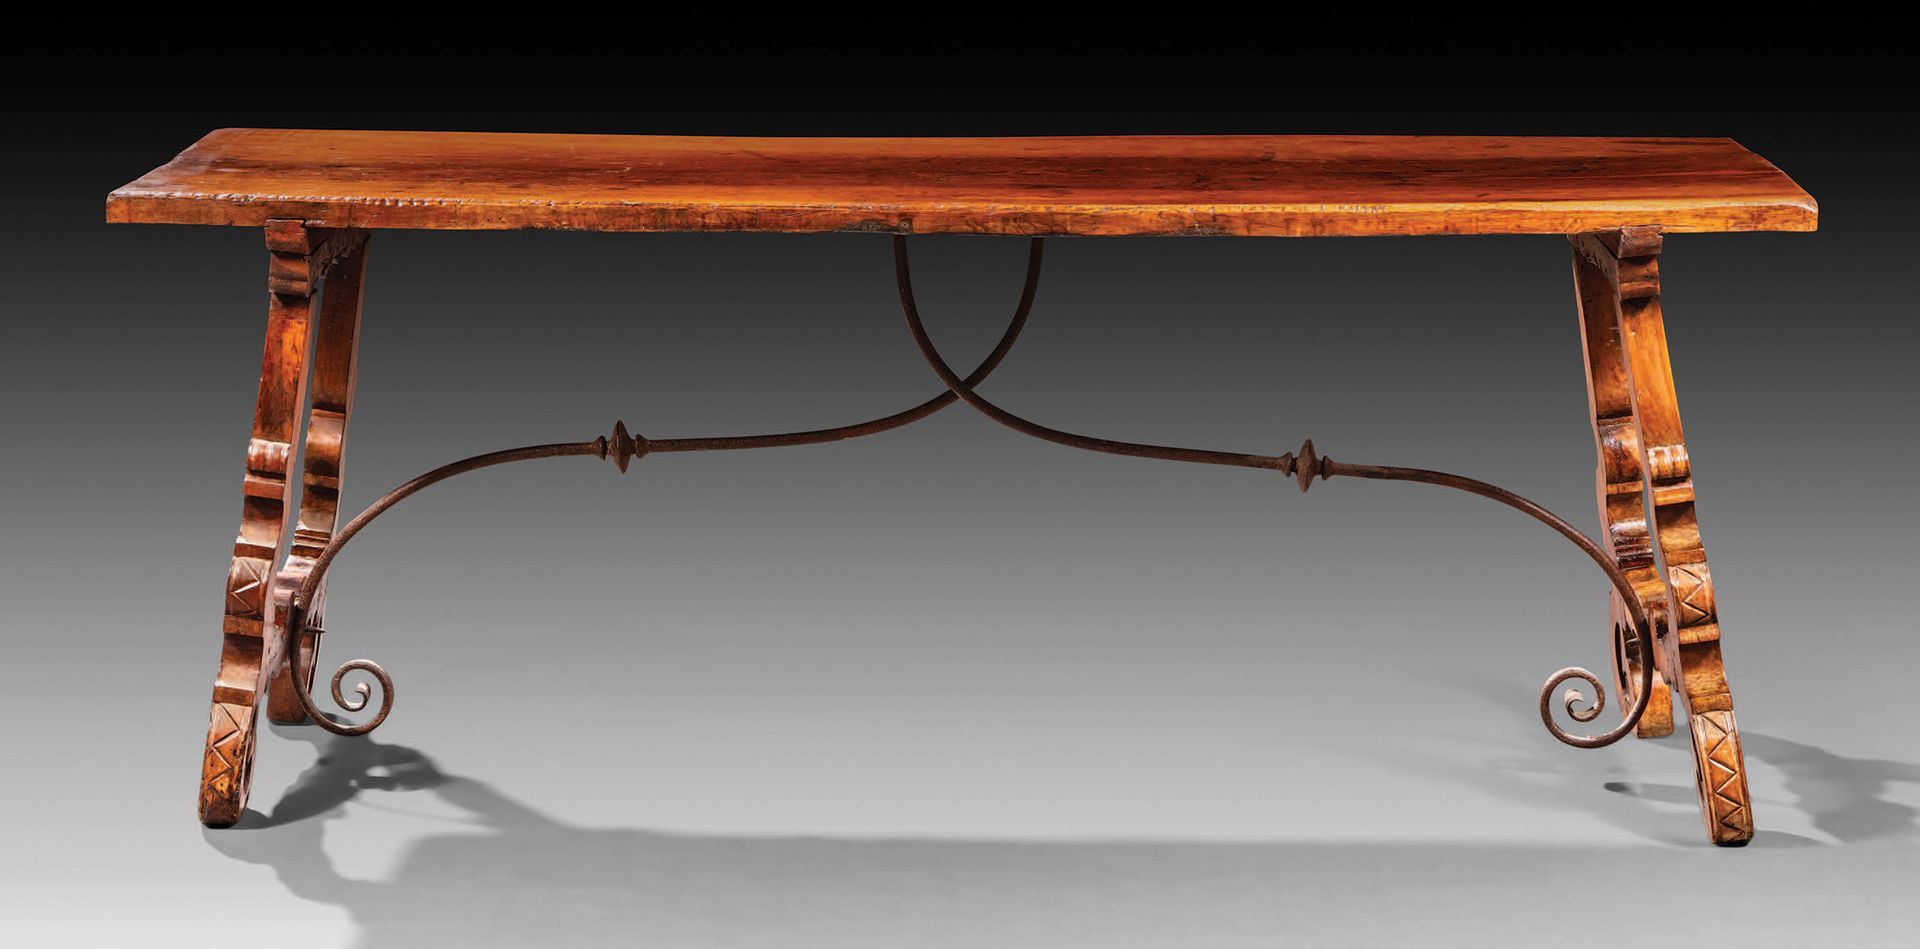 Null 胡桃木大桌，带有扇形边缘的分叉桌腿通过锻铁支架与桌面相连。
西班牙，17 世纪
H.76.5 厘米 - 203 厘米 - 66.5 厘米
虫孔